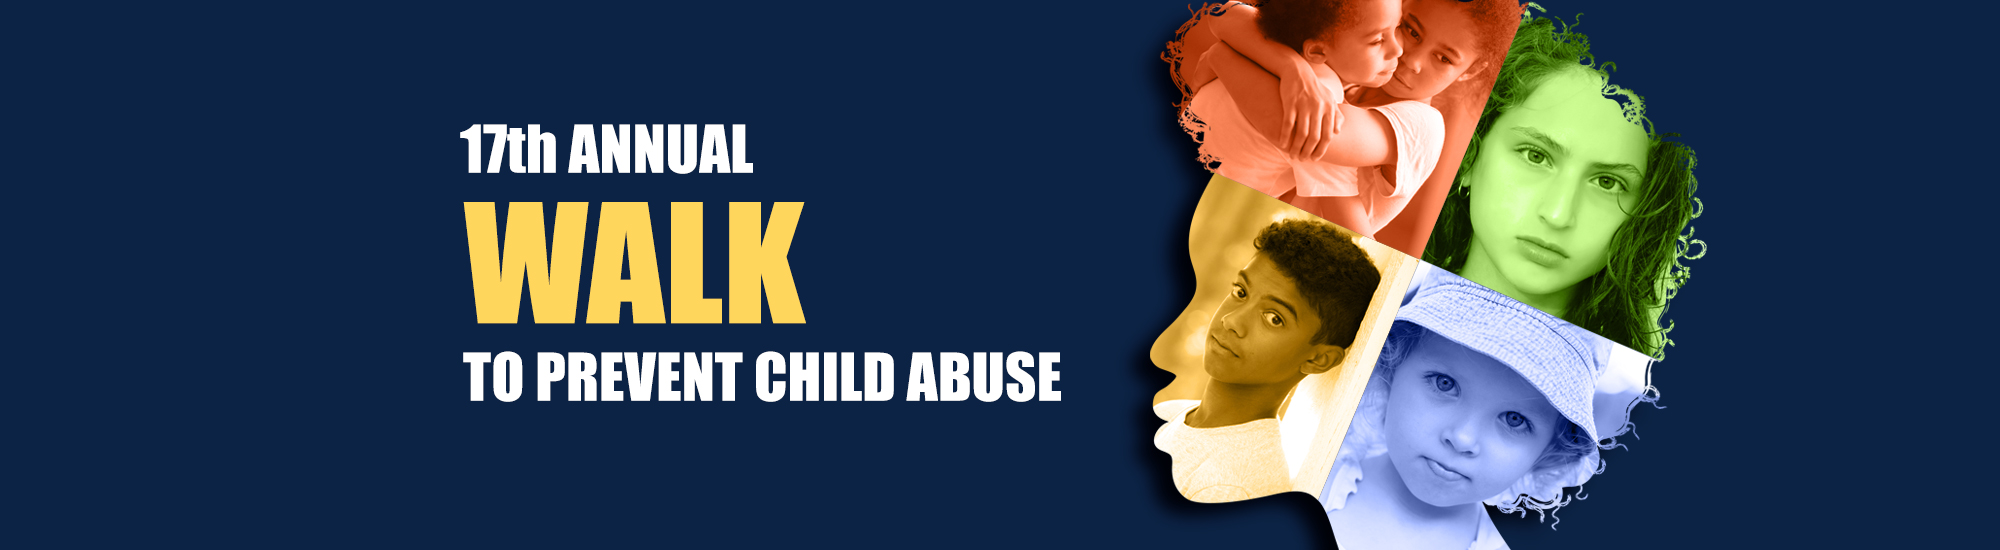 Walk to Prevent Child Abuse